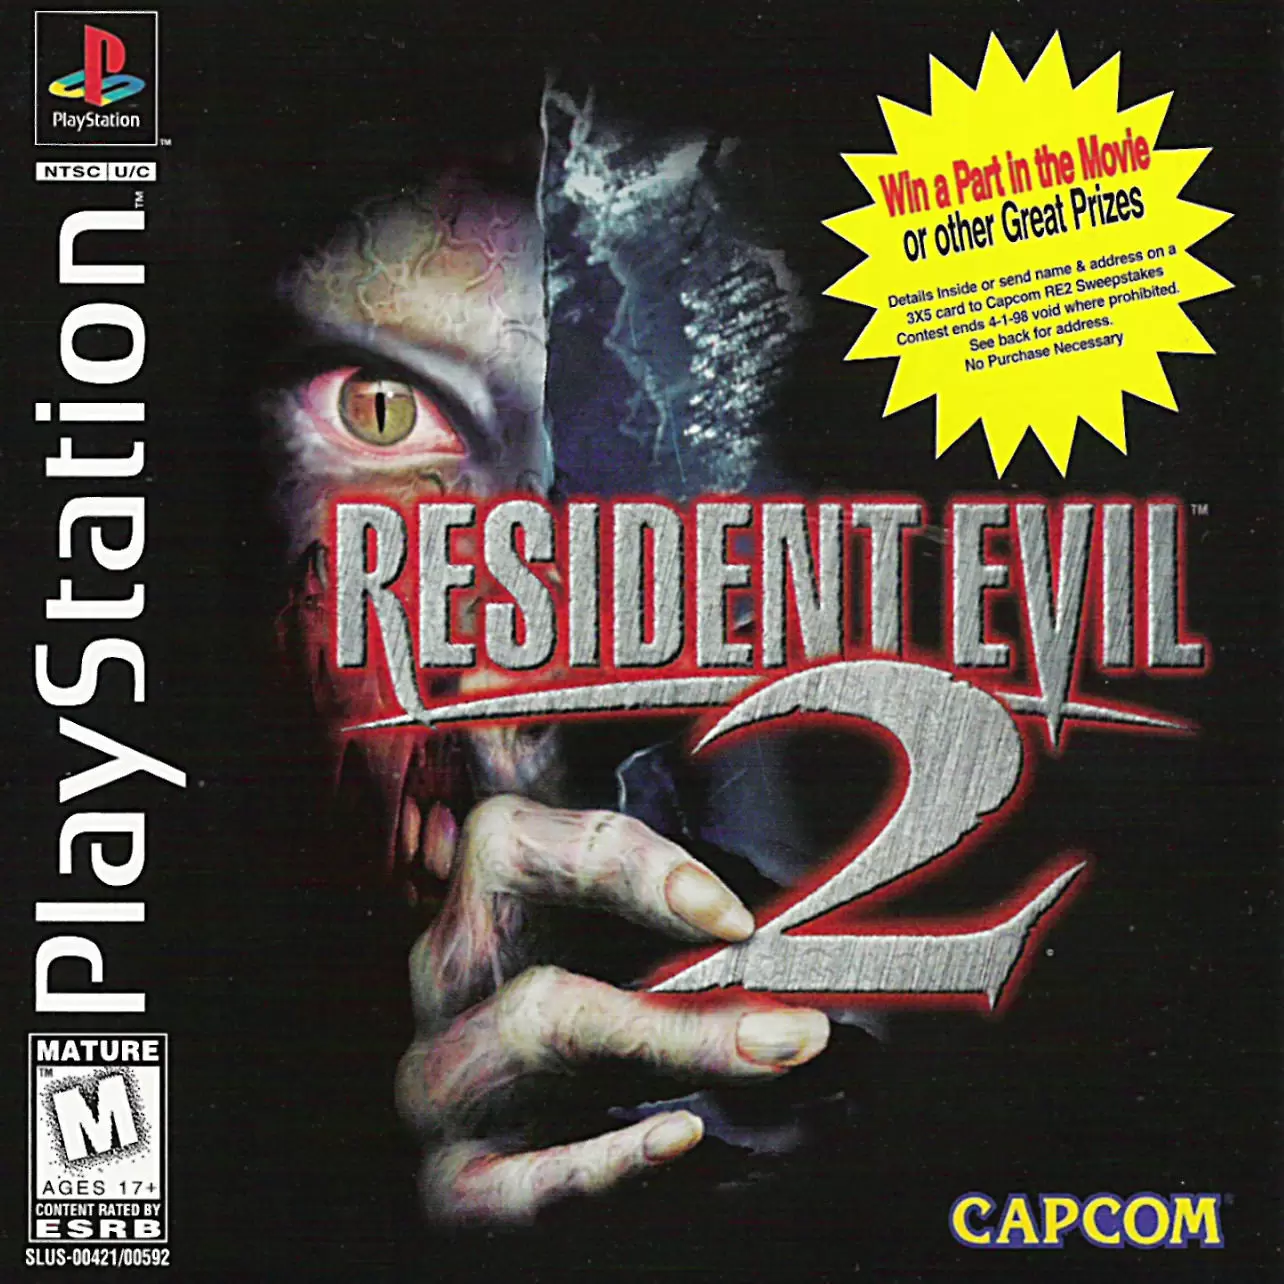 Playstation games - Resident Evil 2